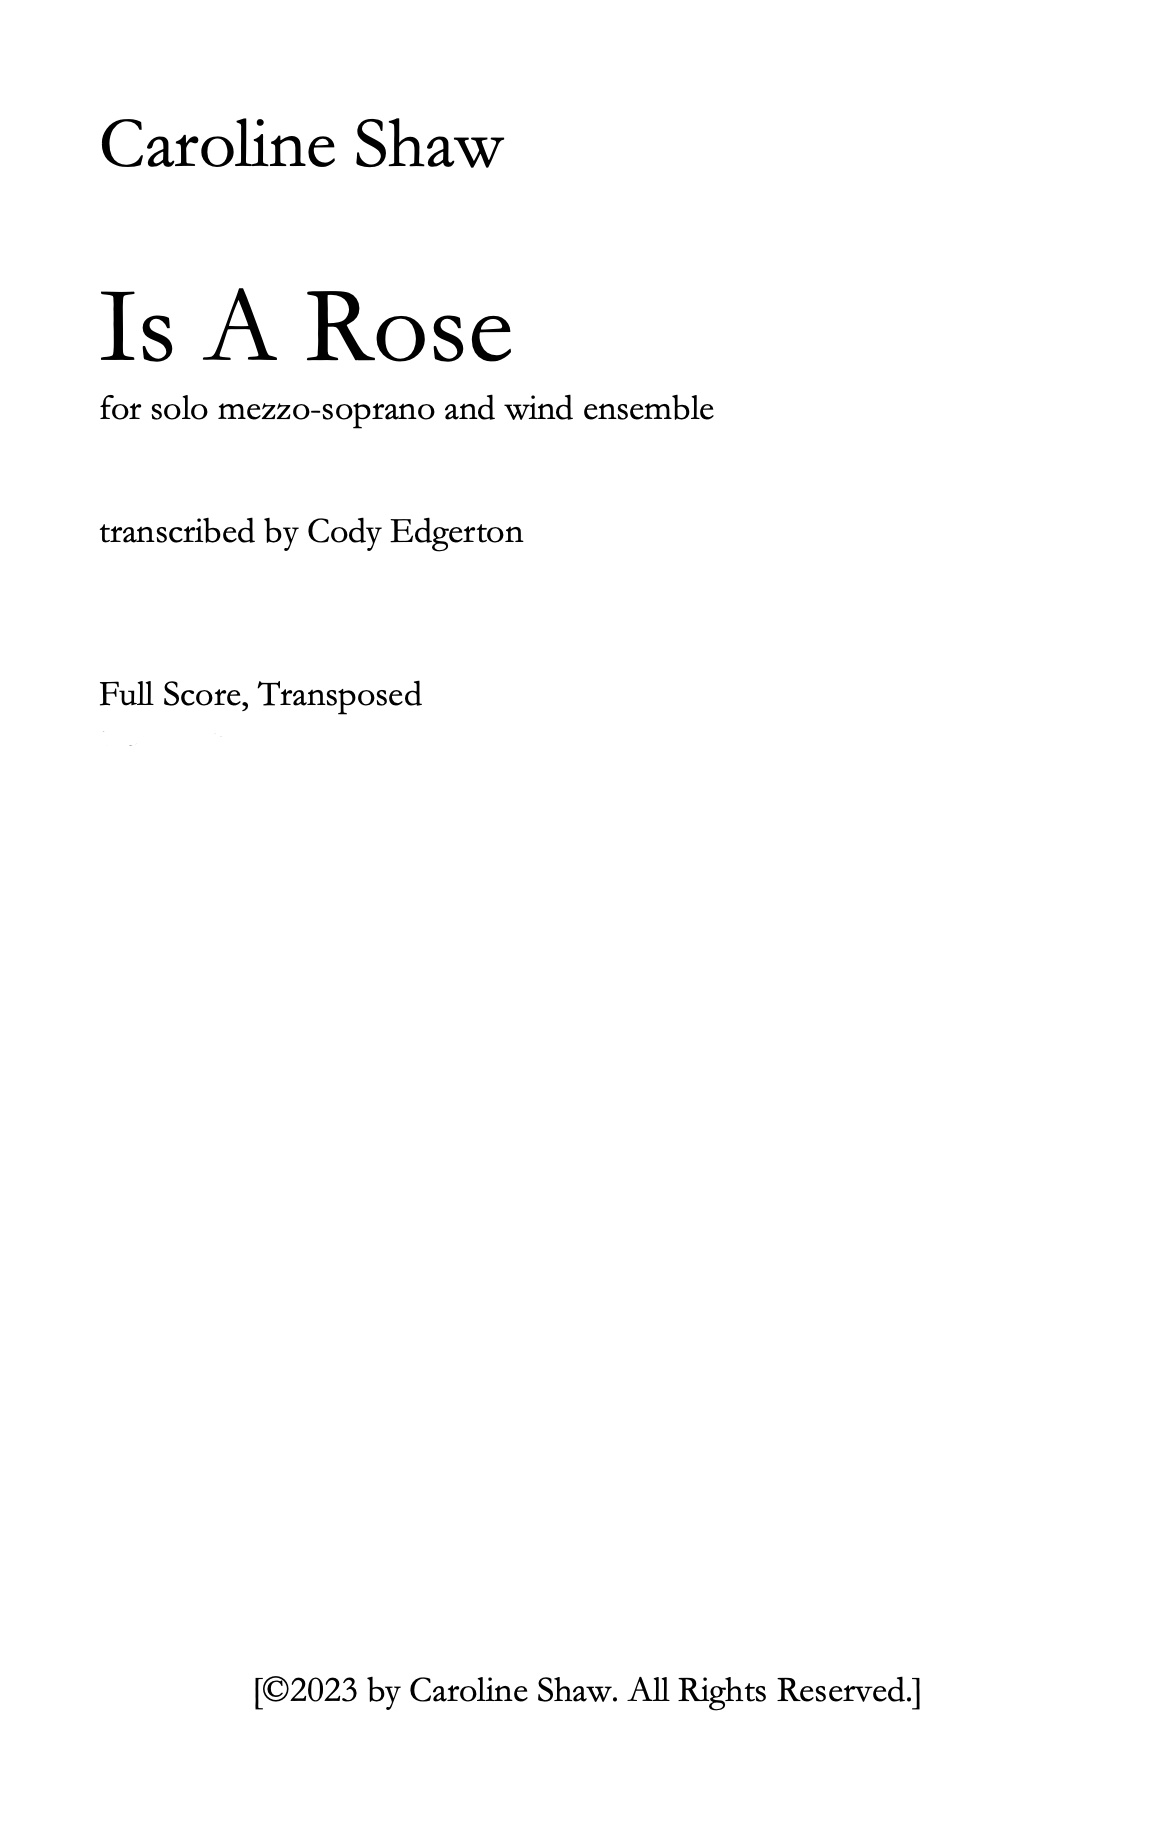 Is A Rose by Caroline Shaw, arr. Edgerton